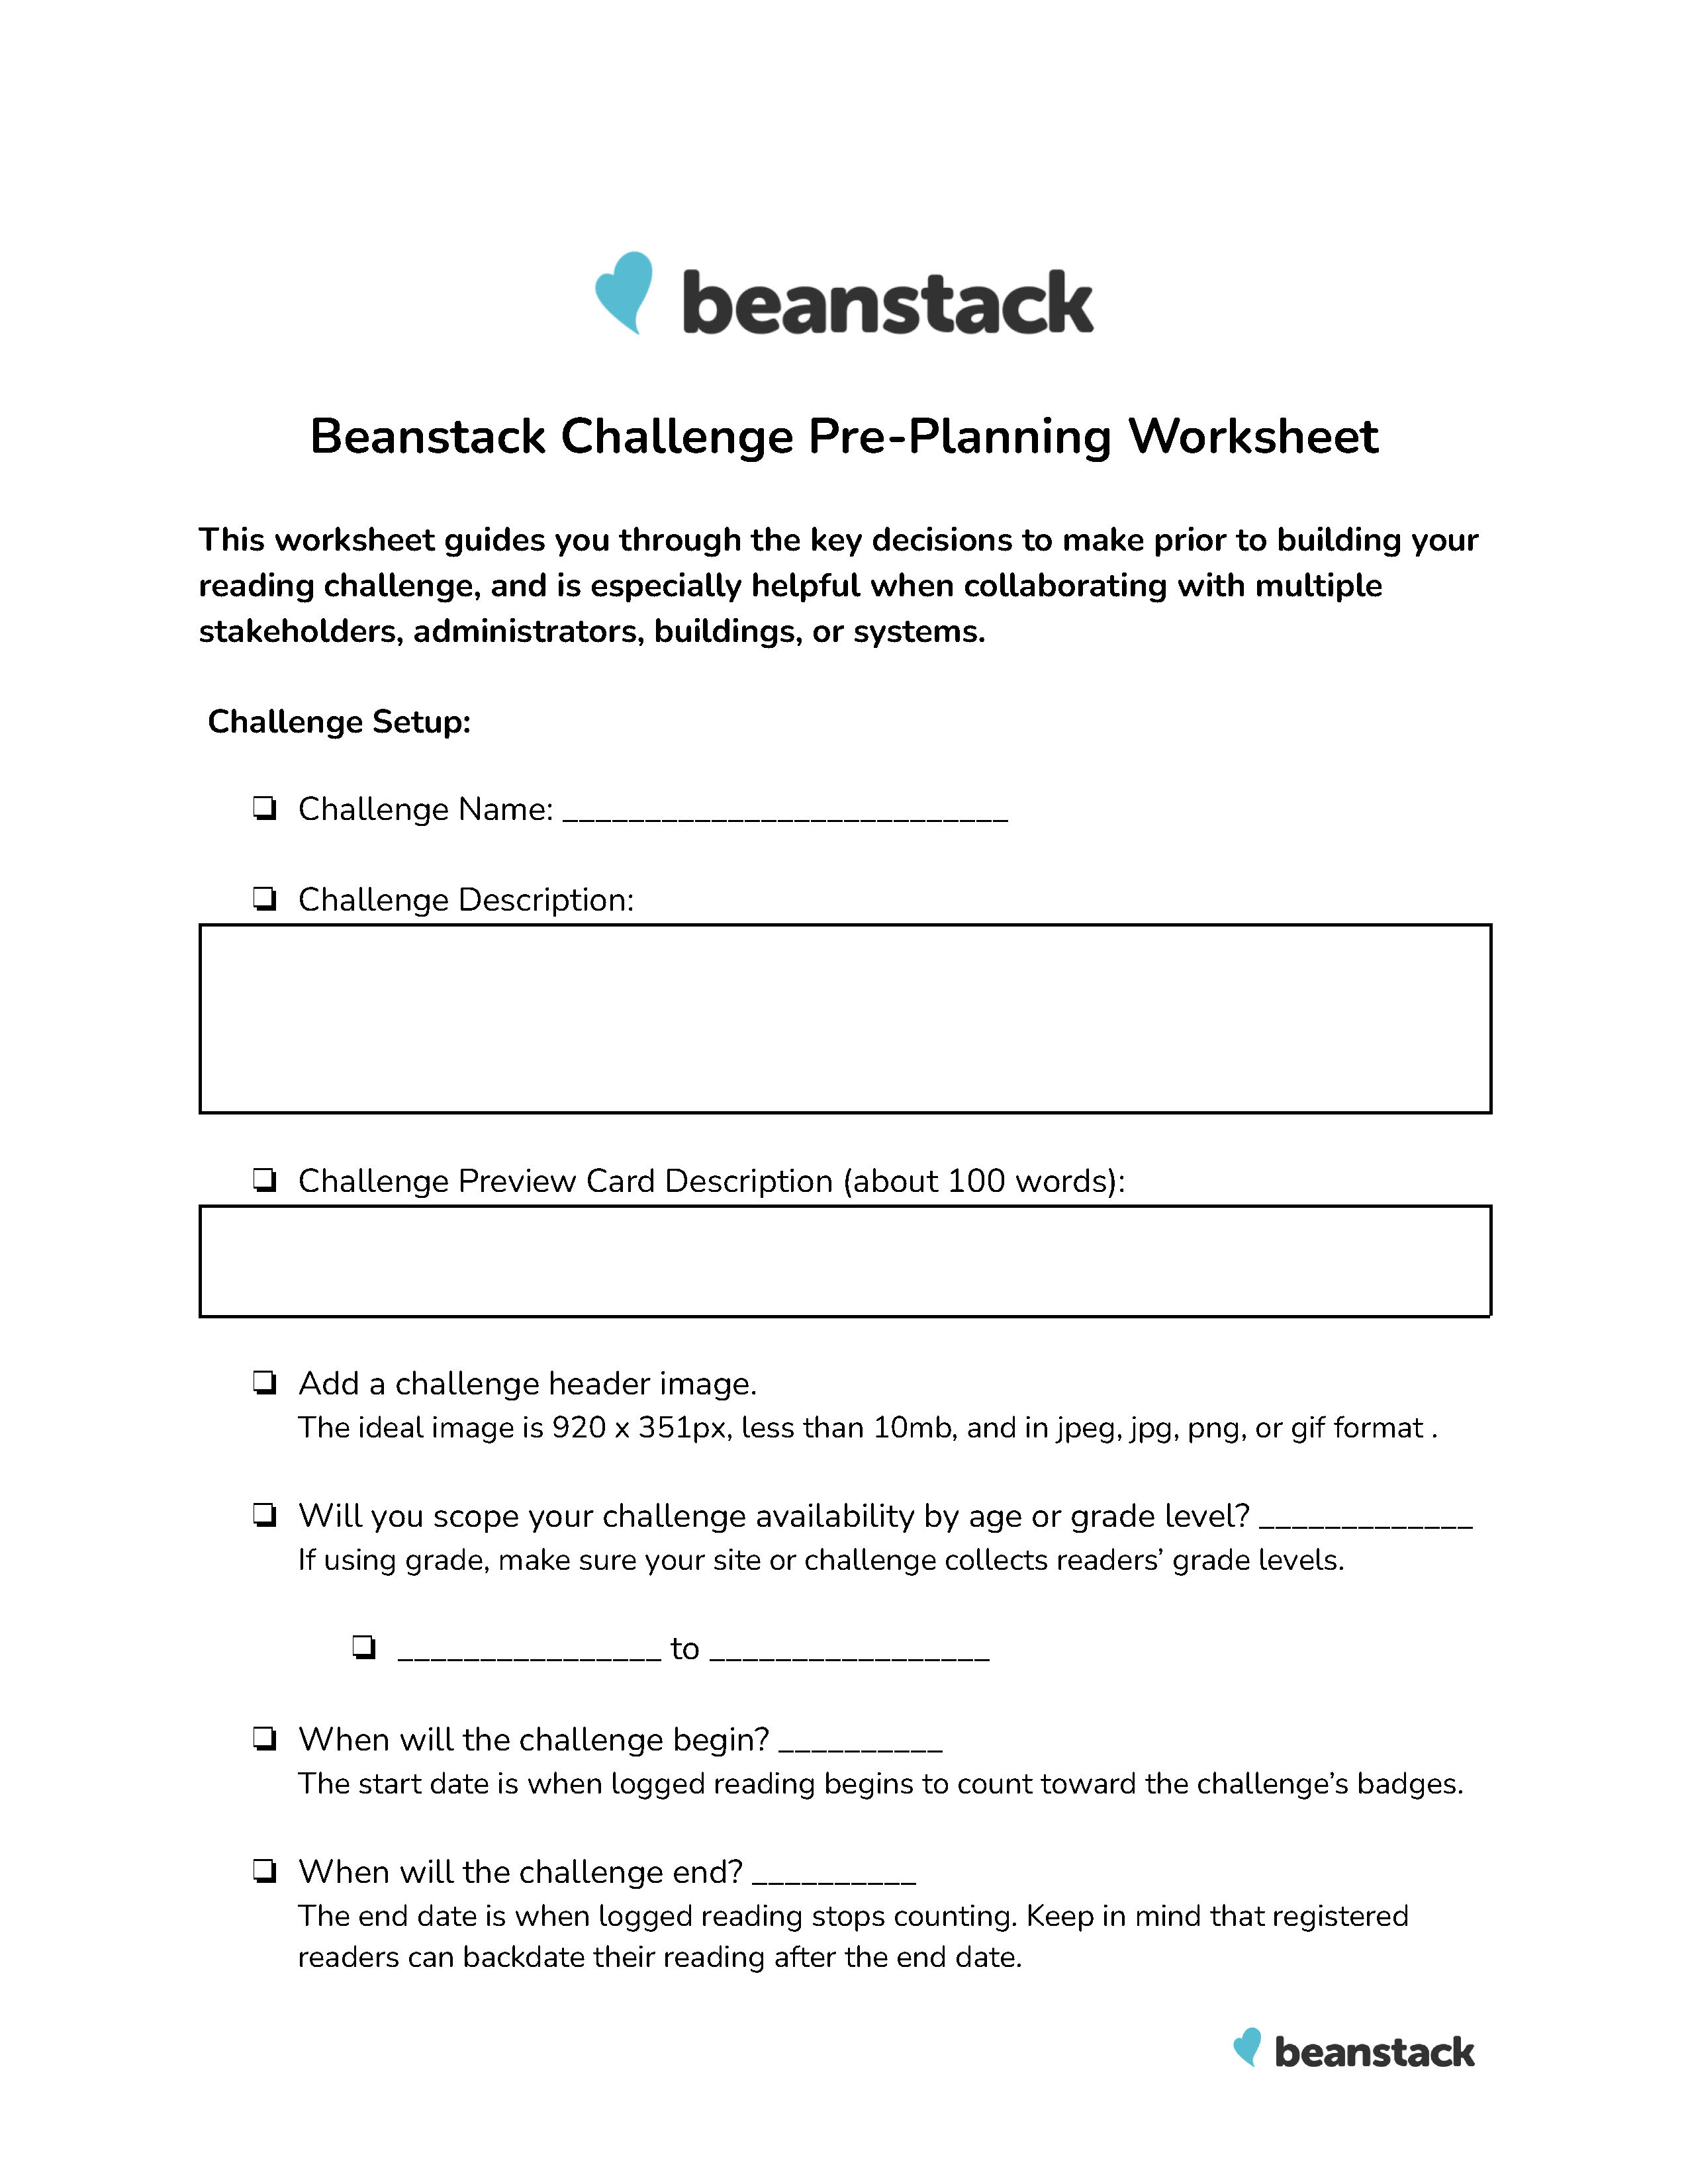 Beanstack_Challenge_Pre-Planning_Worksheet_Page_1.jpg